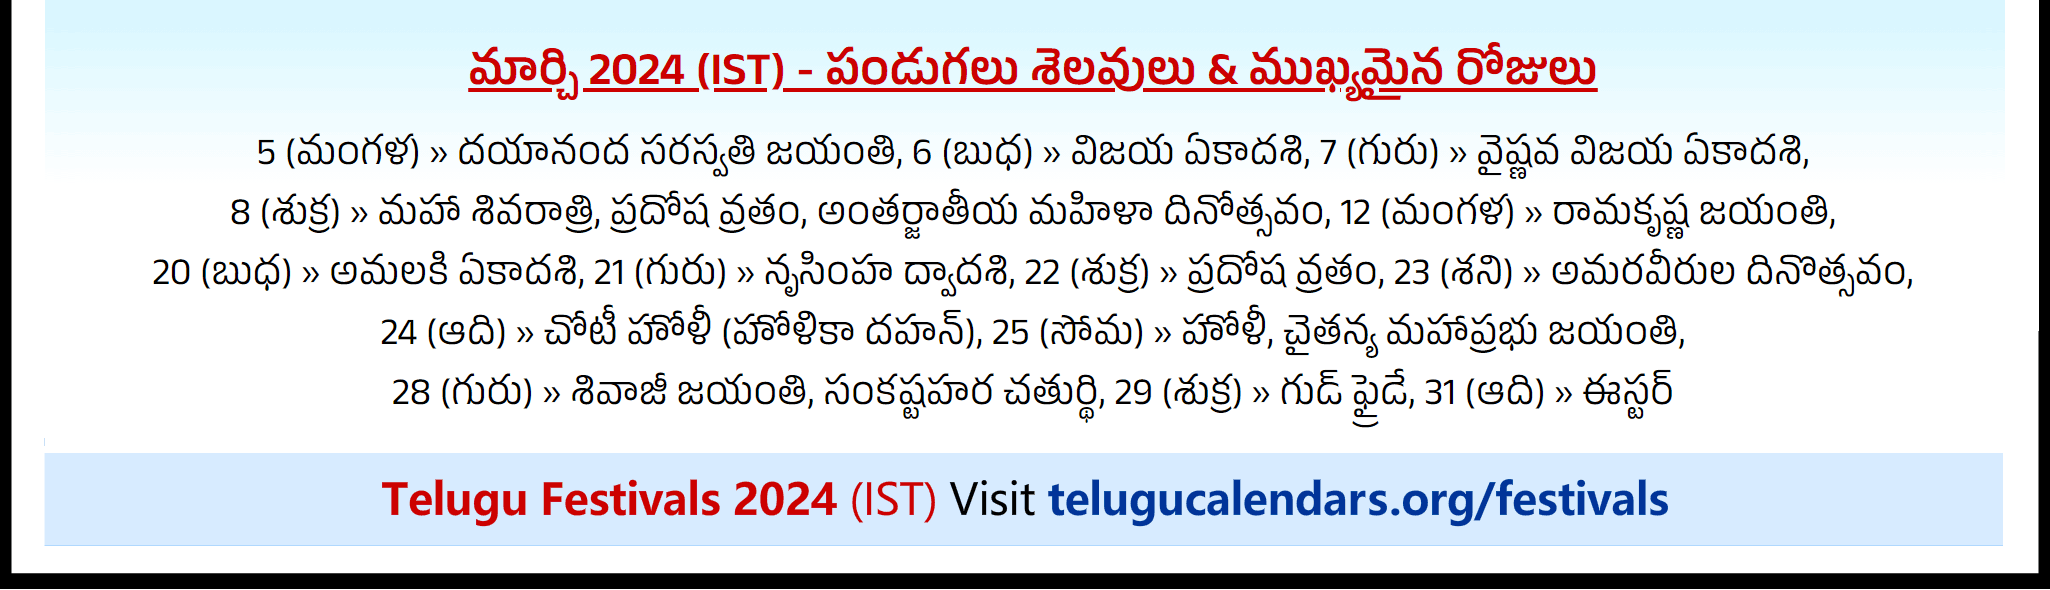 Telugu Festivals 2024 March Los Angeles